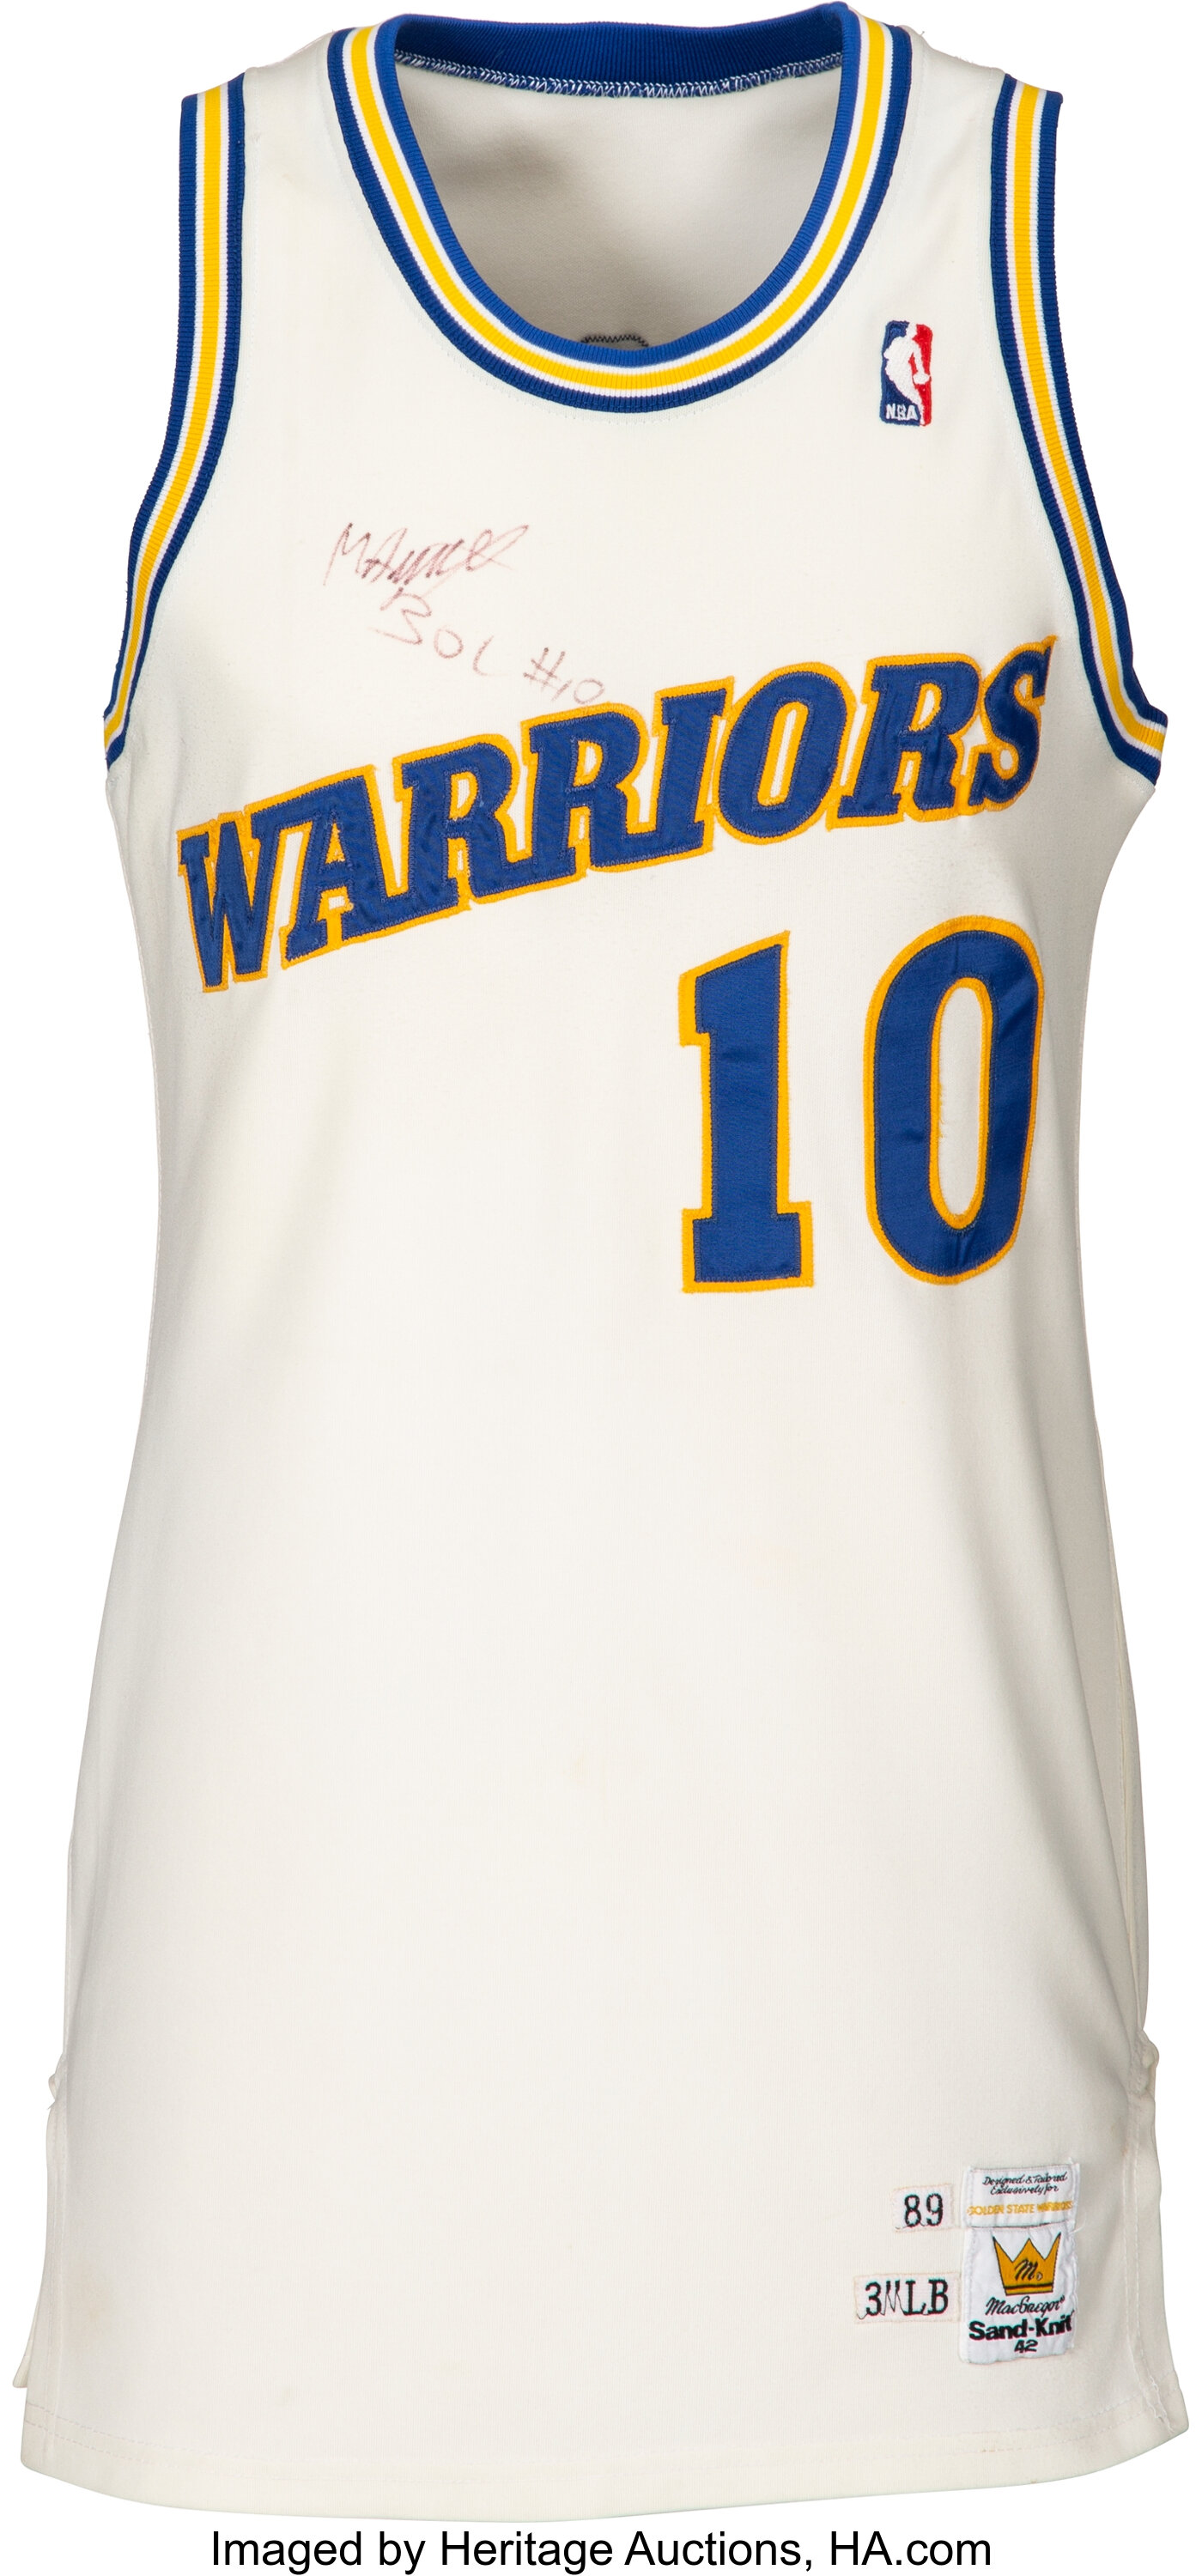 Top 3 Golden State Warriors jerseys worn this season